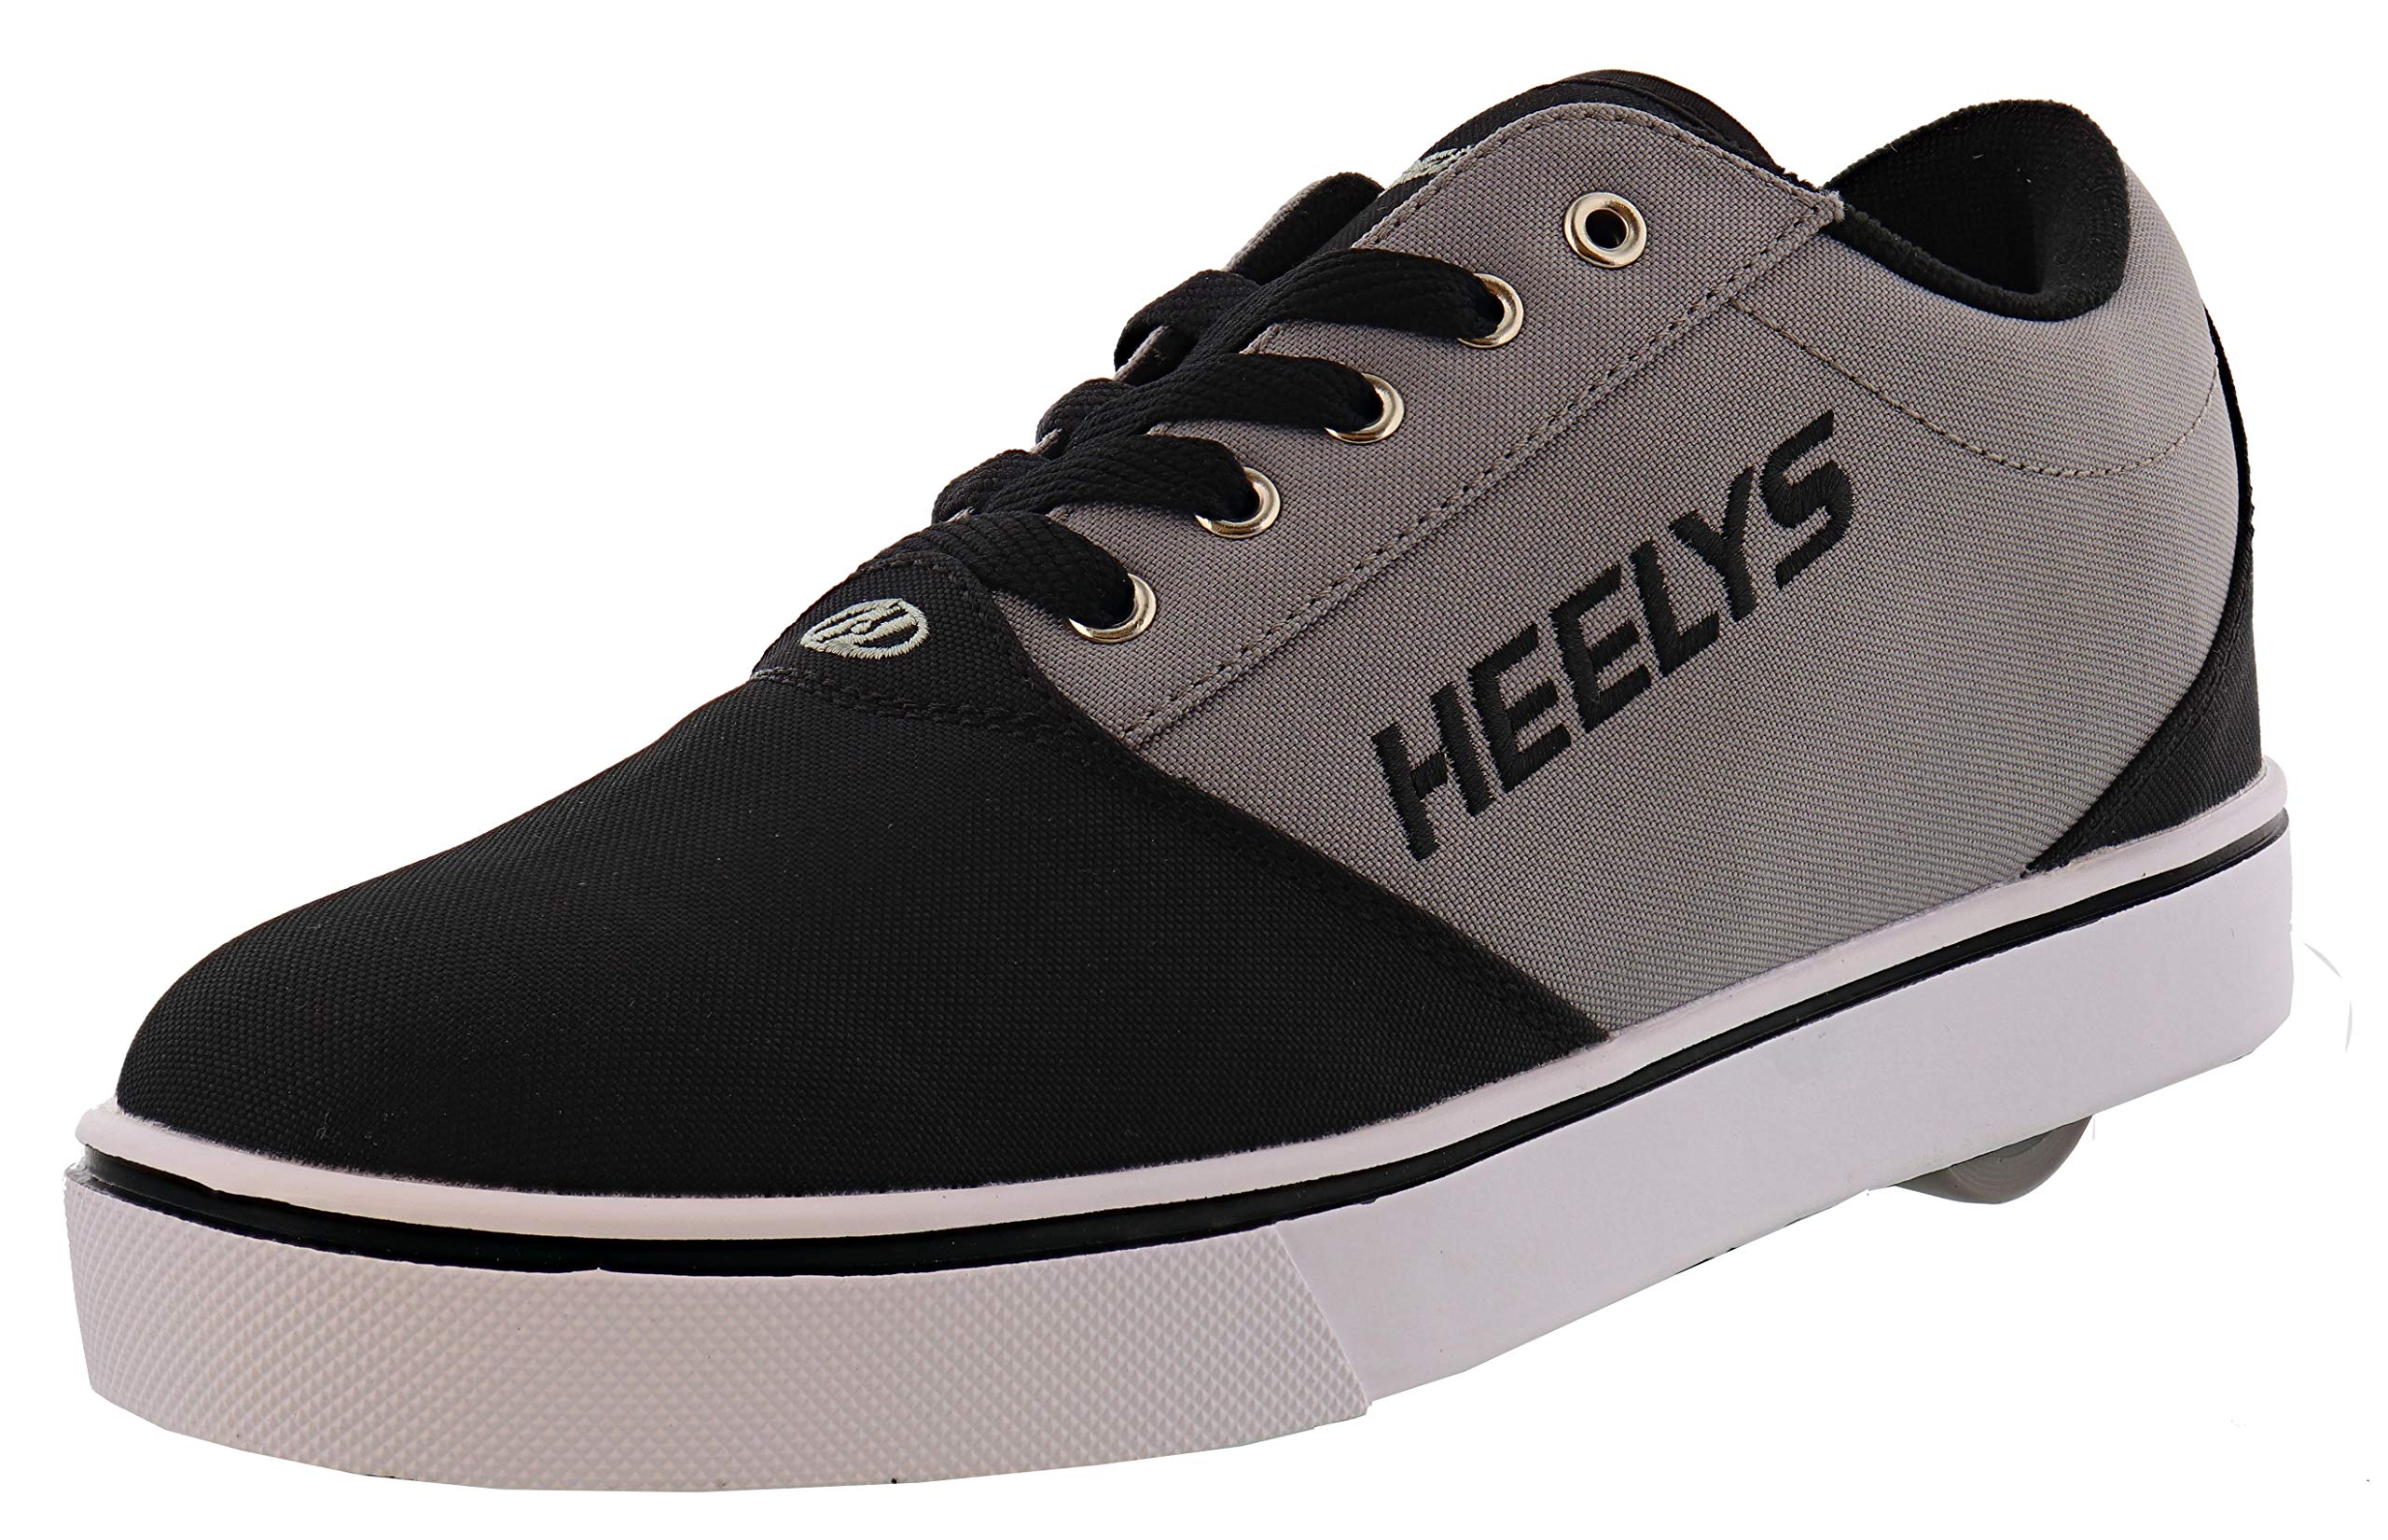 HEELYS Men's Footwear Wheeled Heel Shoe